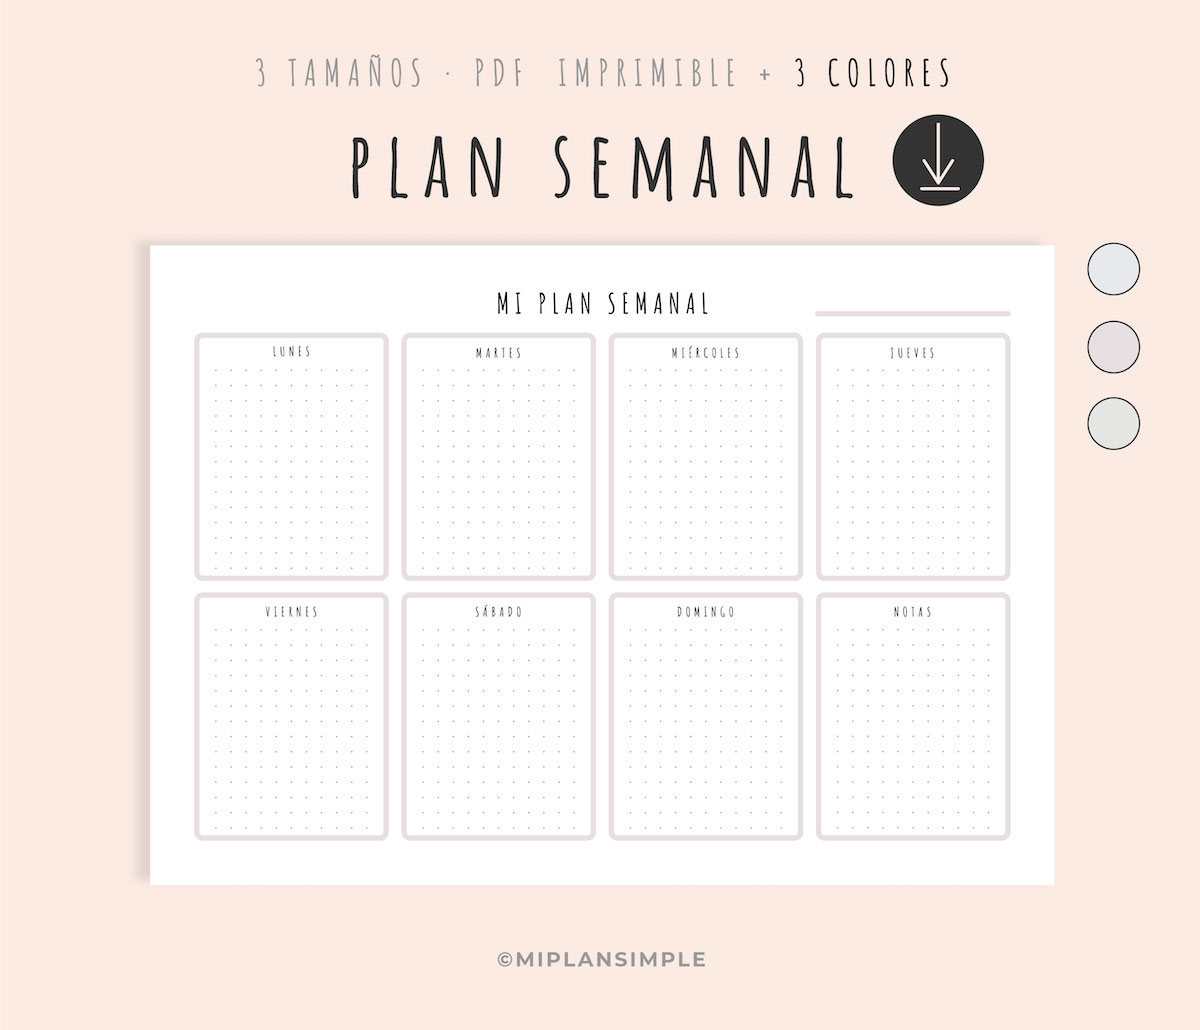 Planner semanal descargable español PDF vista horizontal MIPLANSIMPLE